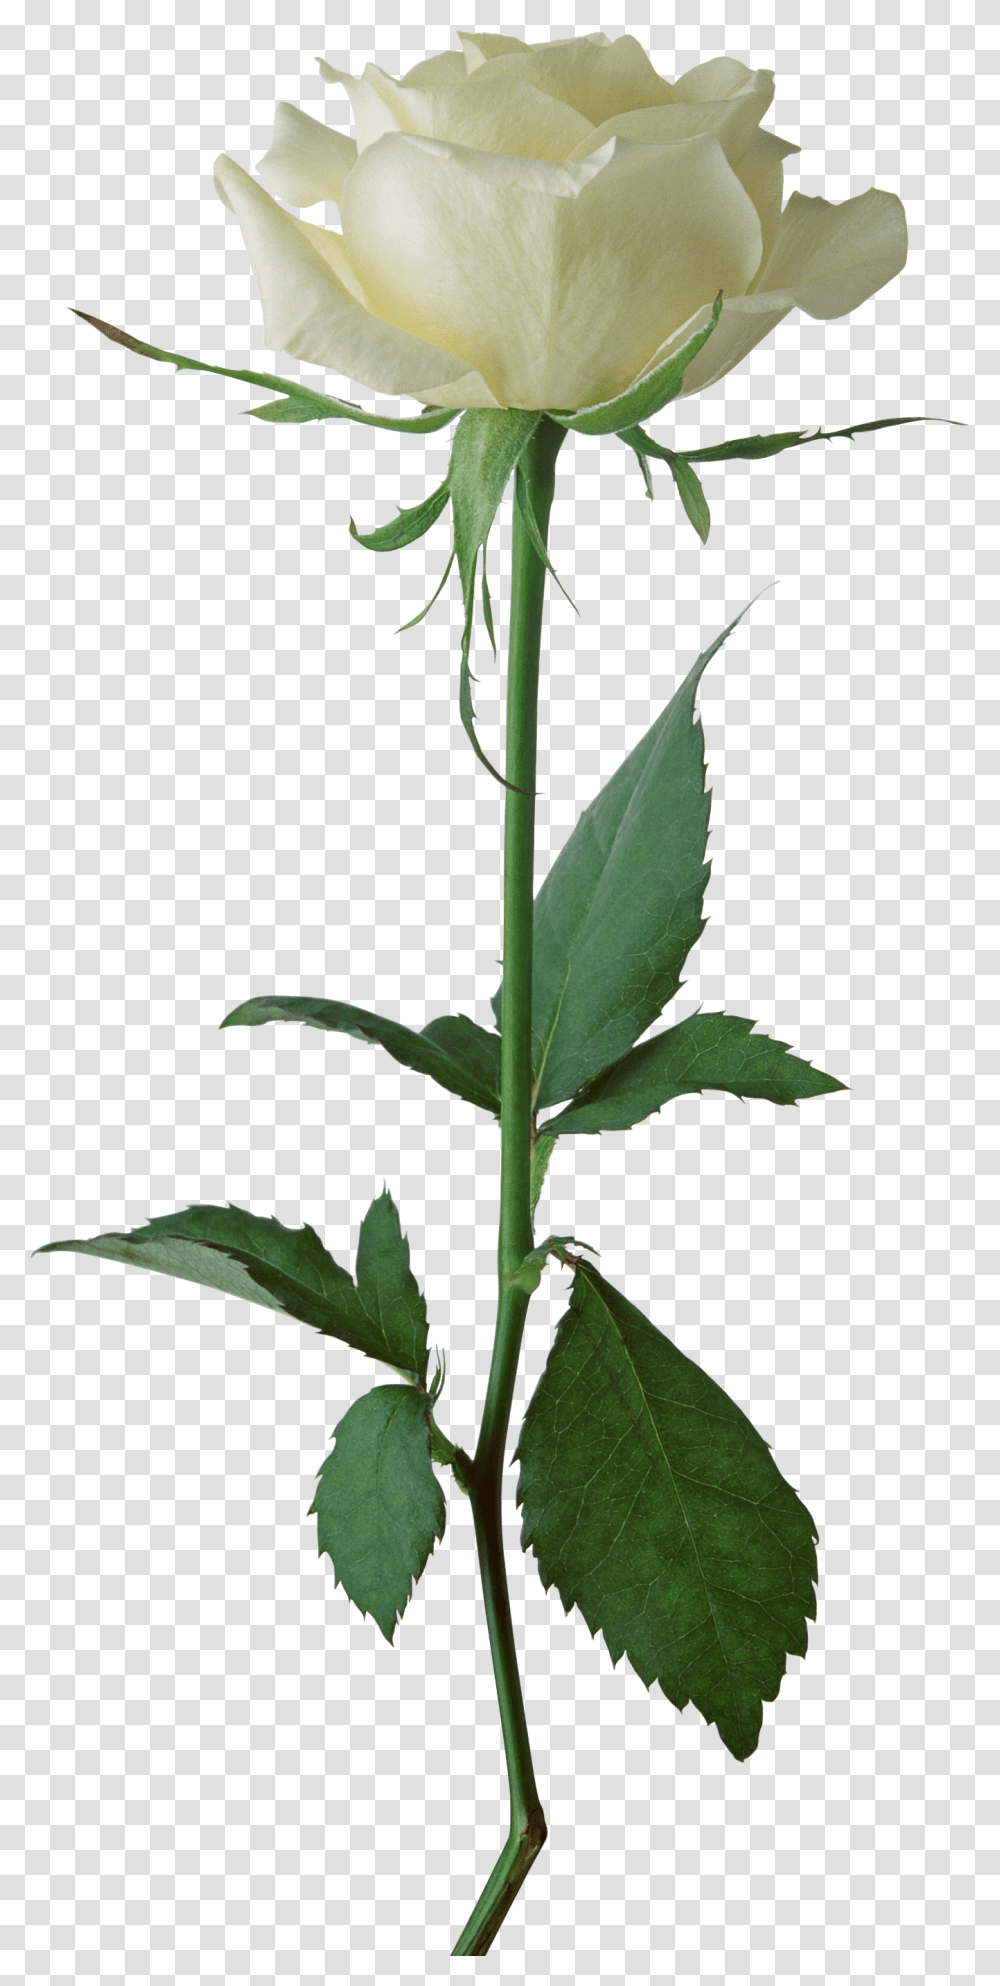 Stem Of A Plant Stem Of A Plant Images, Flower, Blossom, Leaf, Iris Transparent Png